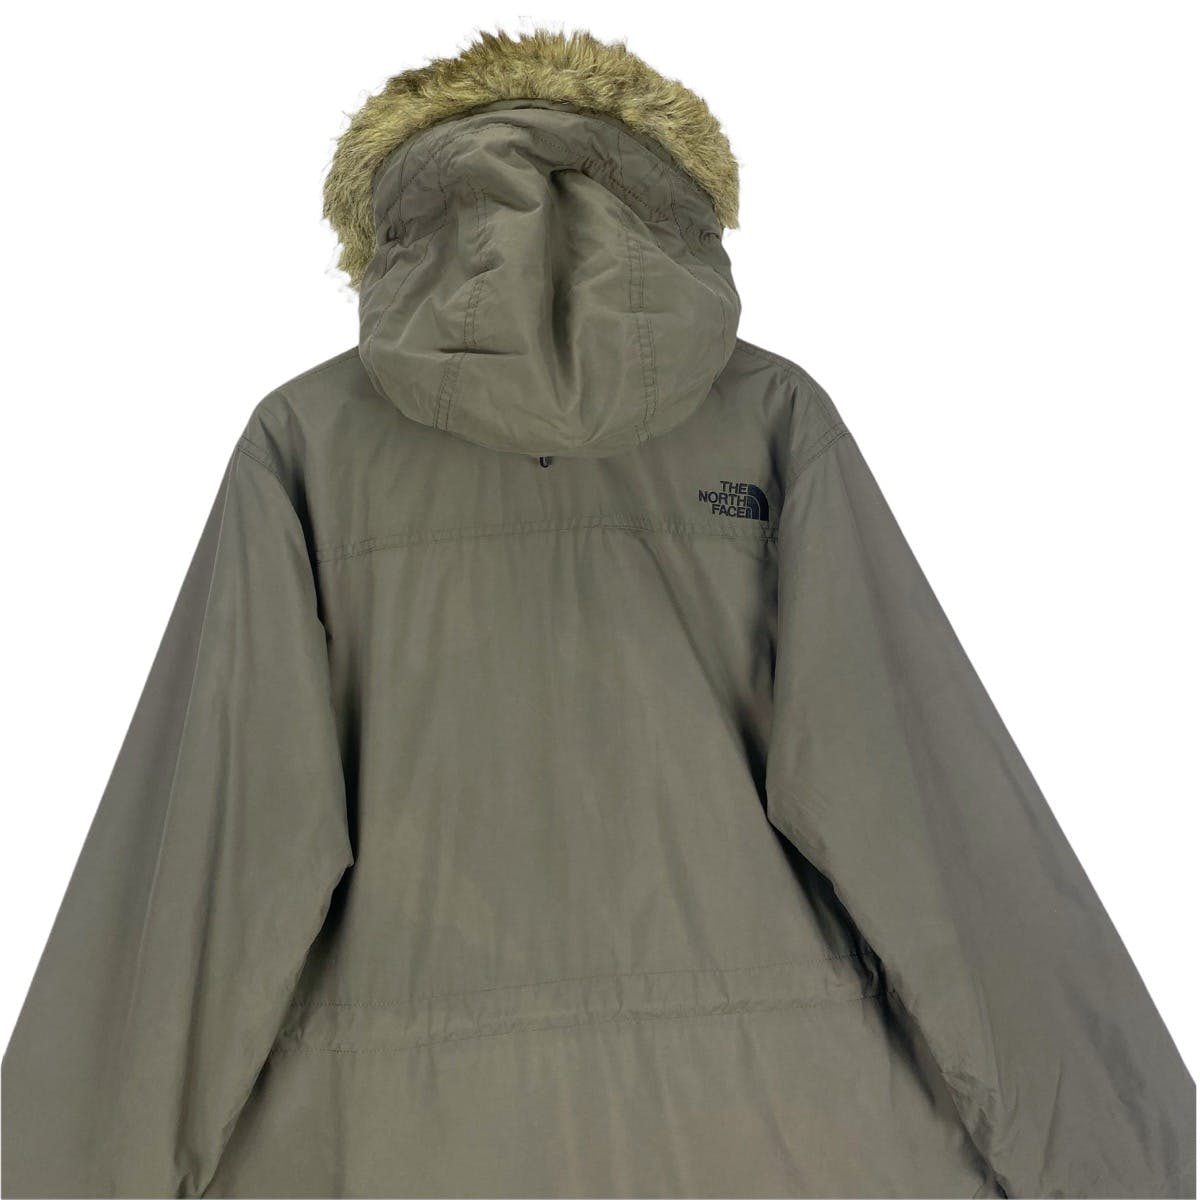 Vintage The North Face Faux Fur Hoodie Jacket - 14